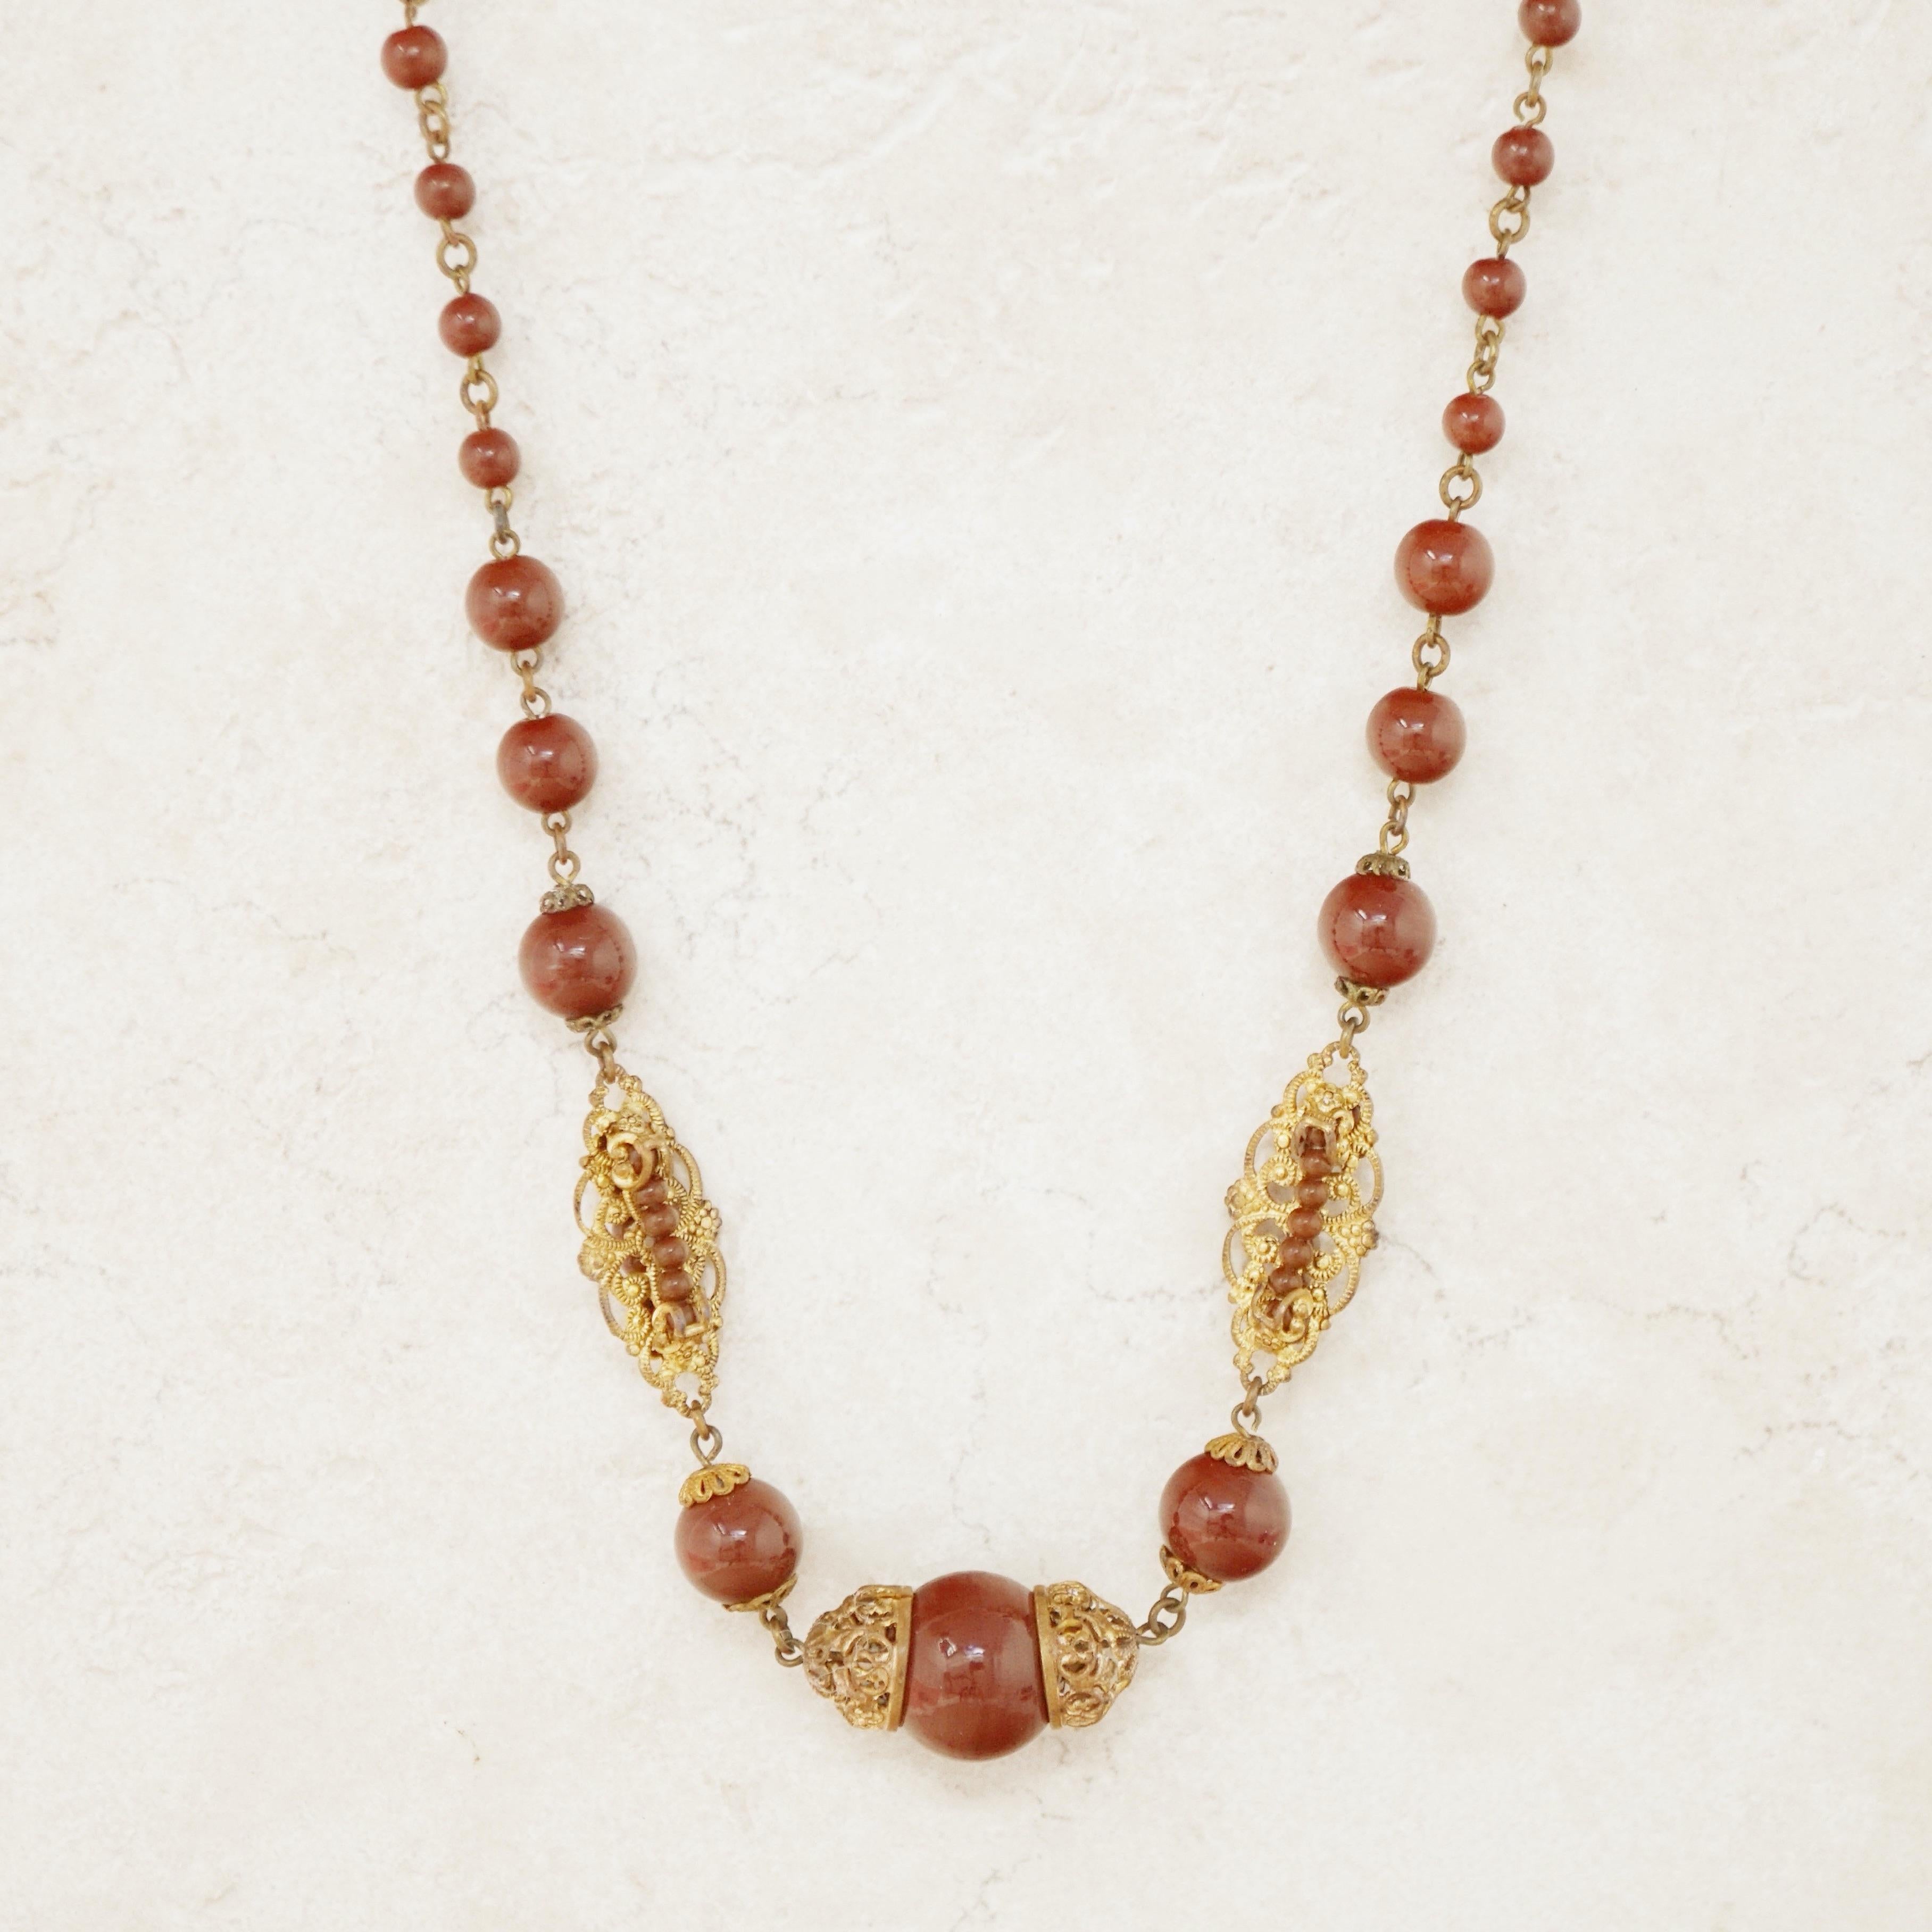 czech glass bead necklace vintage